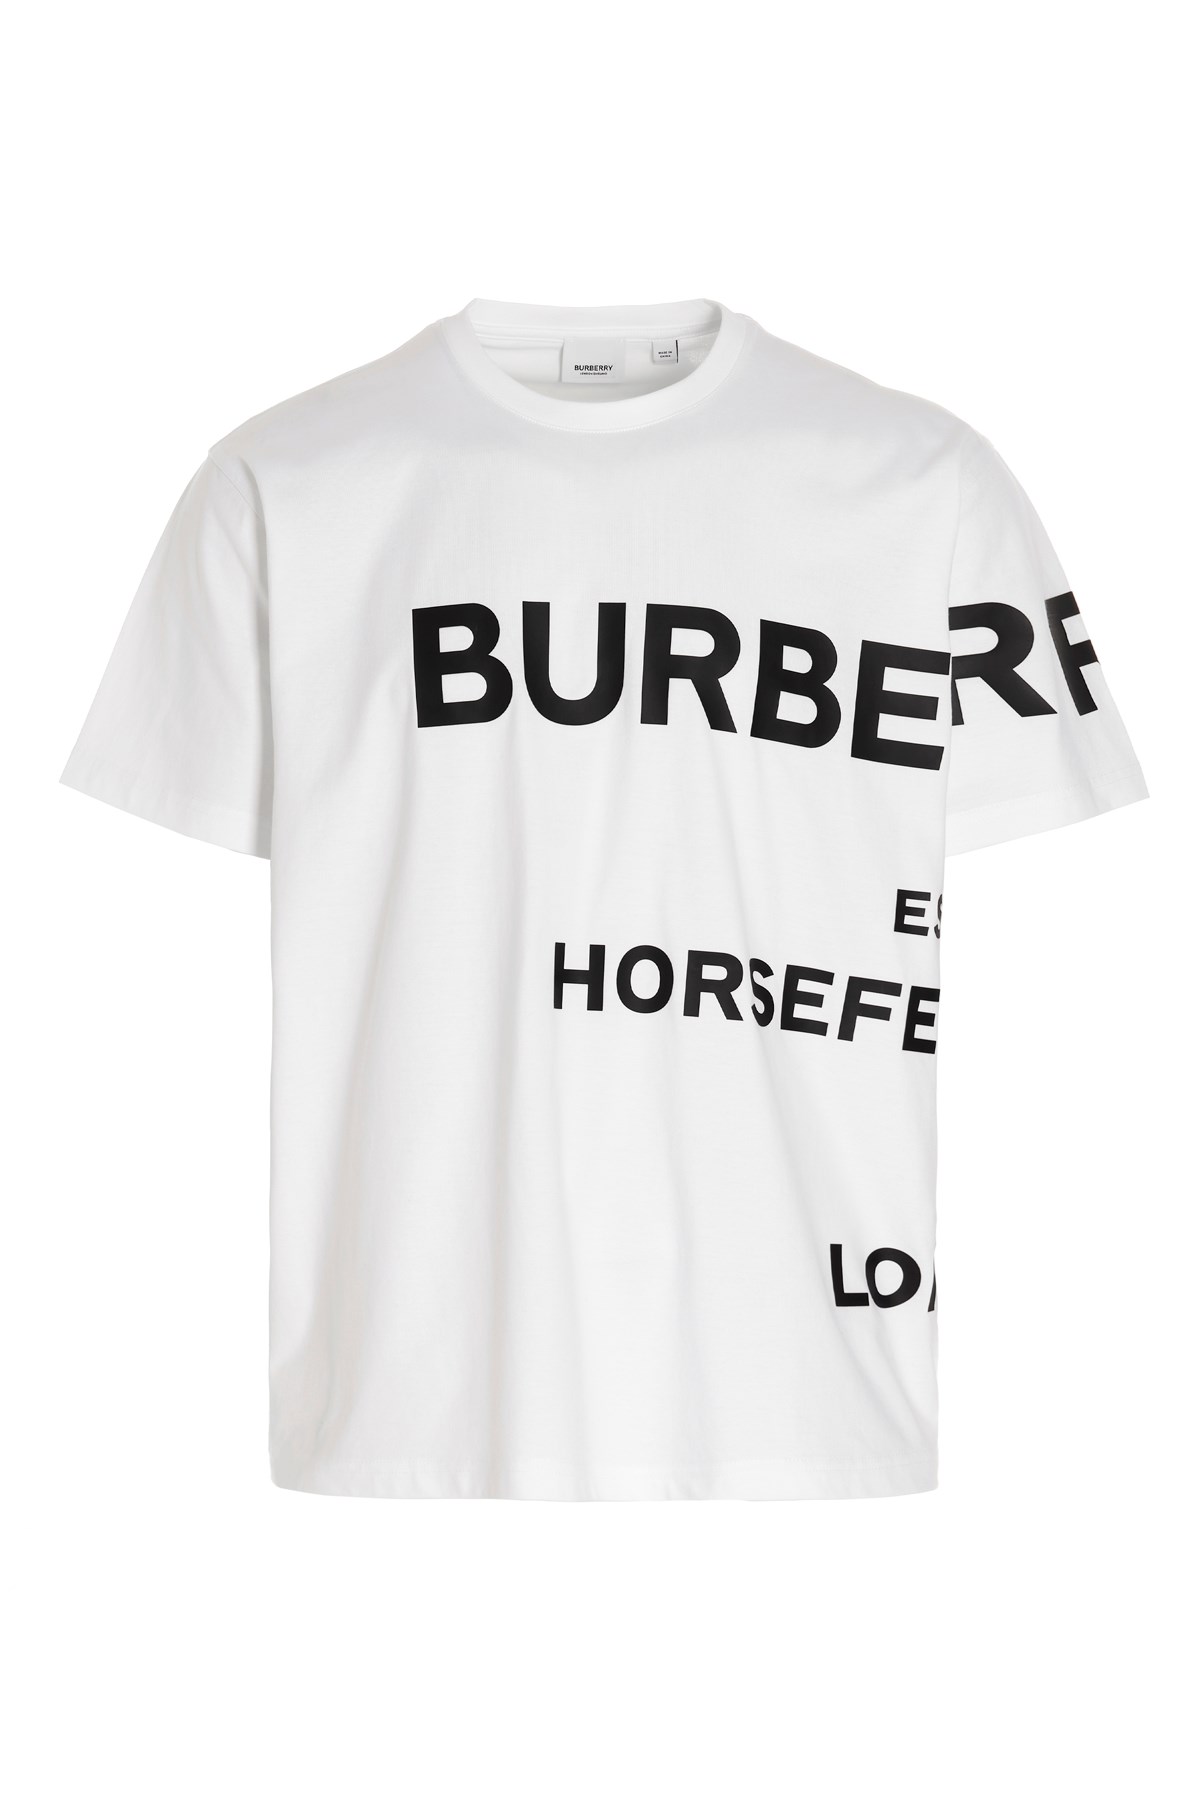 BURBERRY 'Halford' T-Shirt